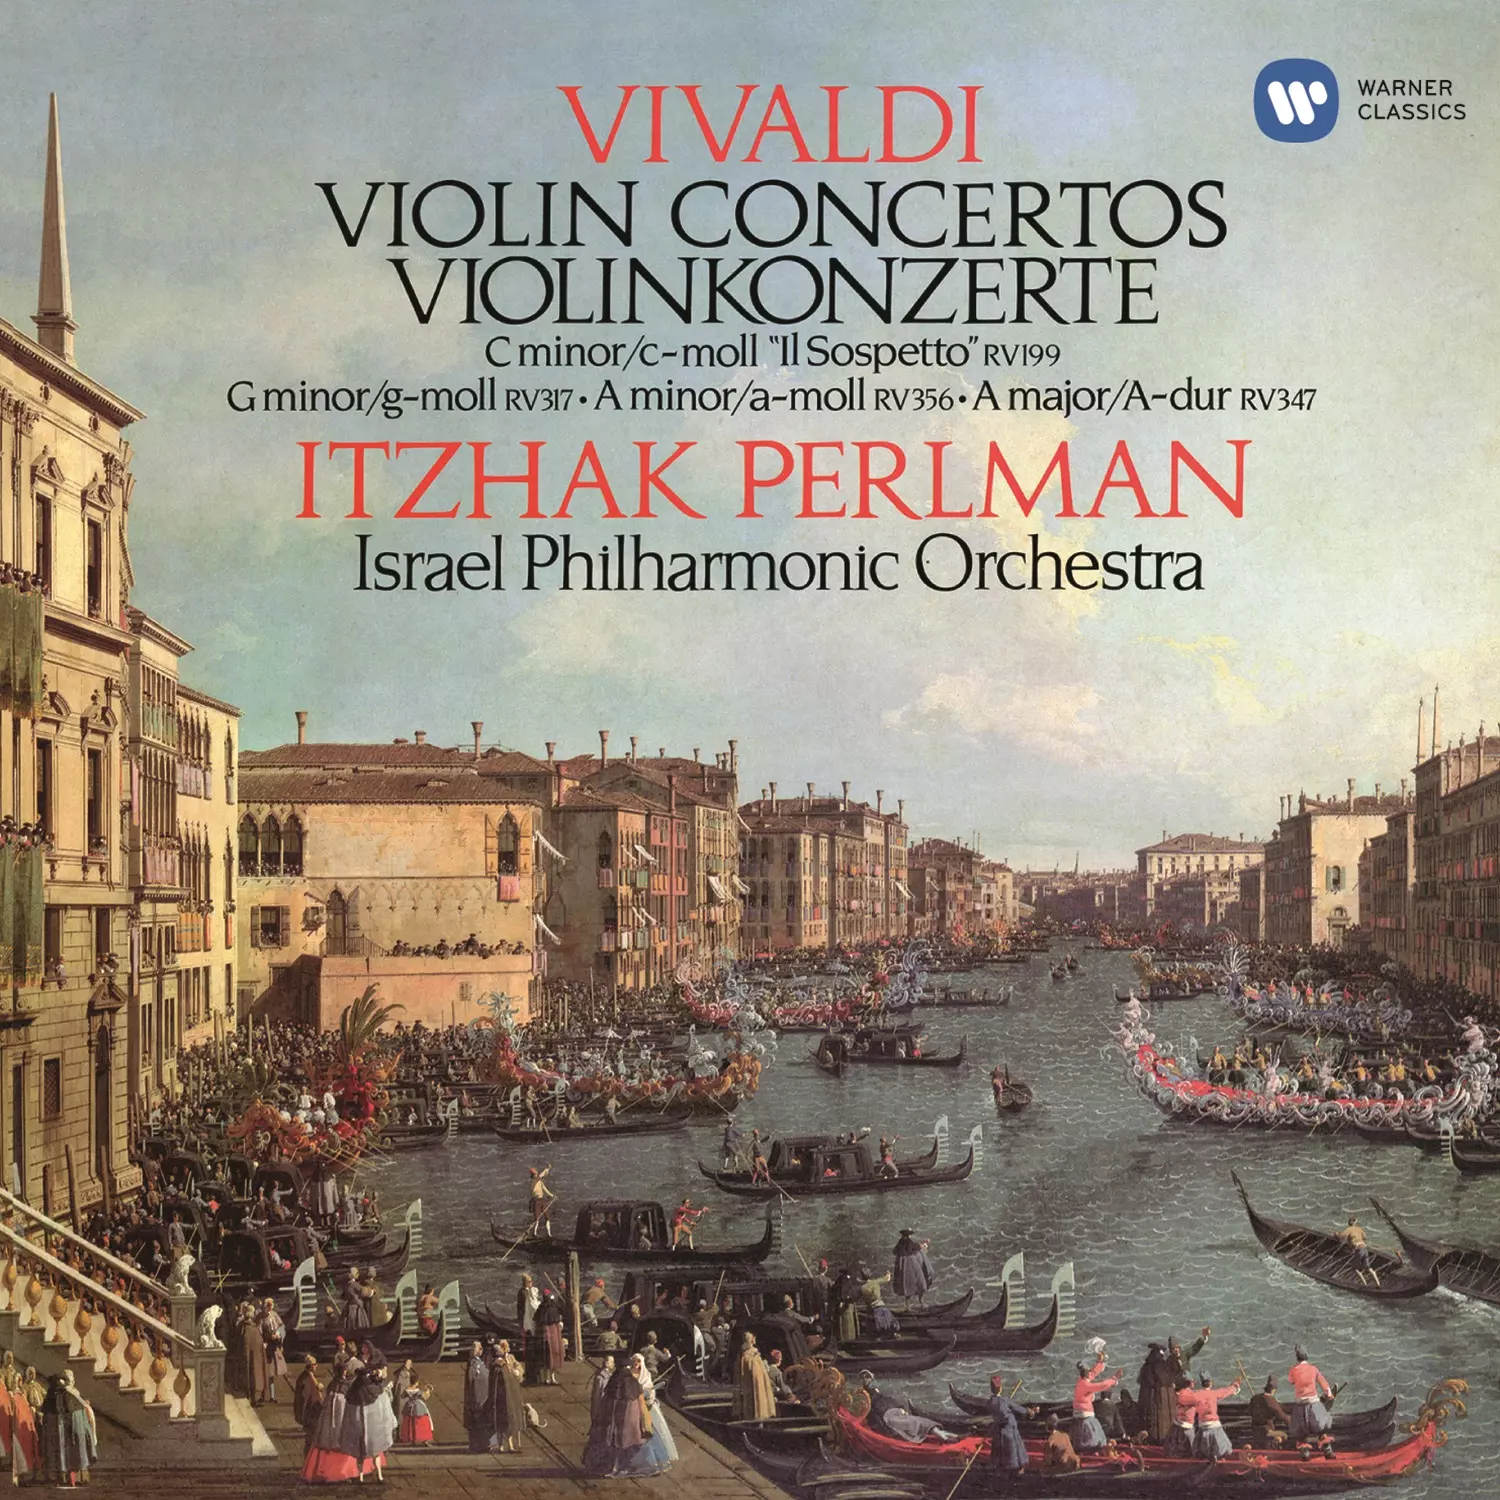 Vivaldi: The Four Seasons & Violin Concertos